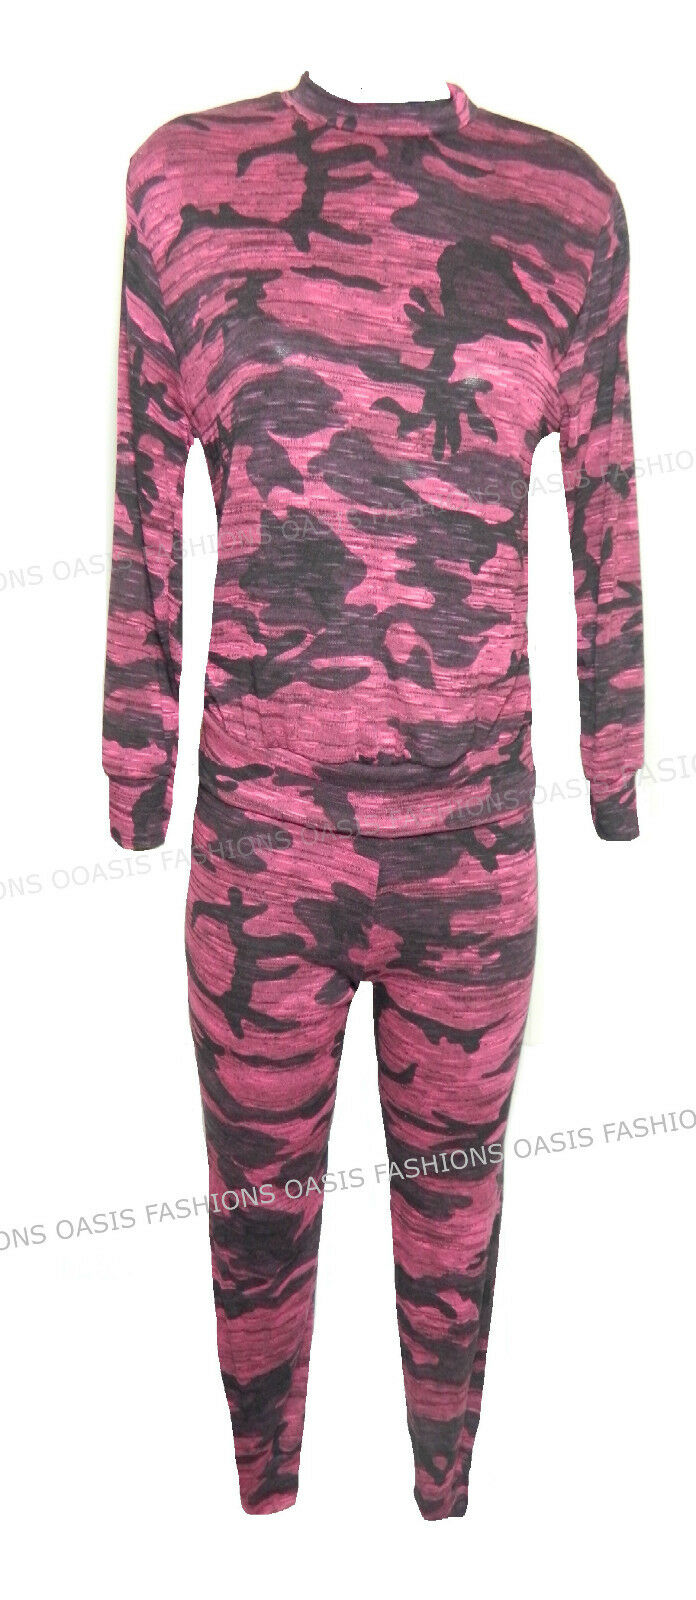 Children's Pink Camo Loungewear Set.